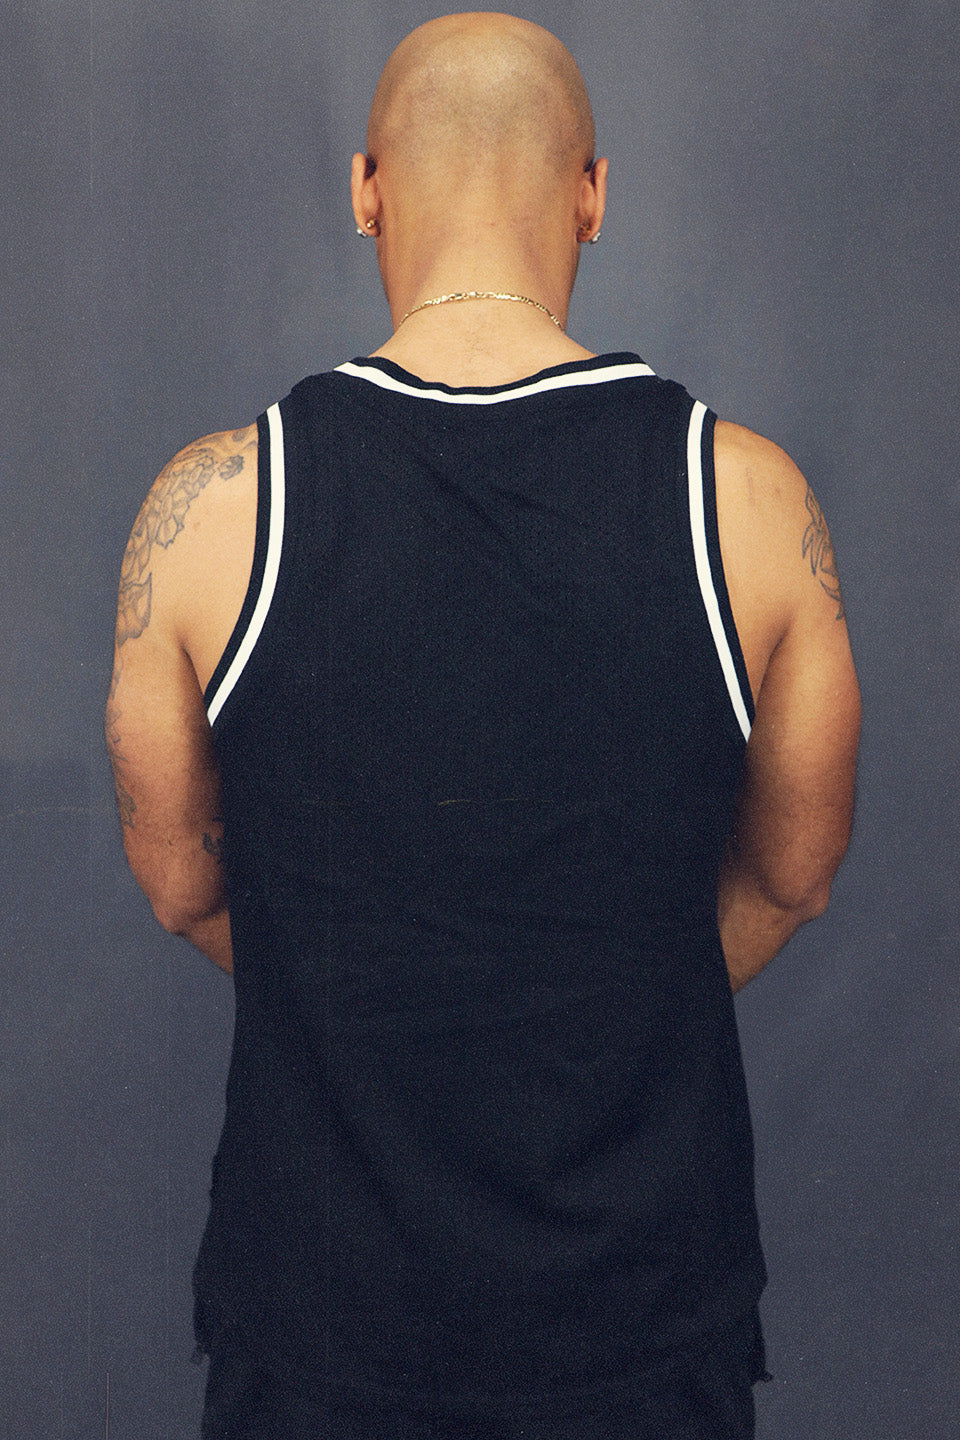 Back of the Men's Sleeveless Basketball Shirt Muscle Workout Black Brooklyn Mesh Tank Top